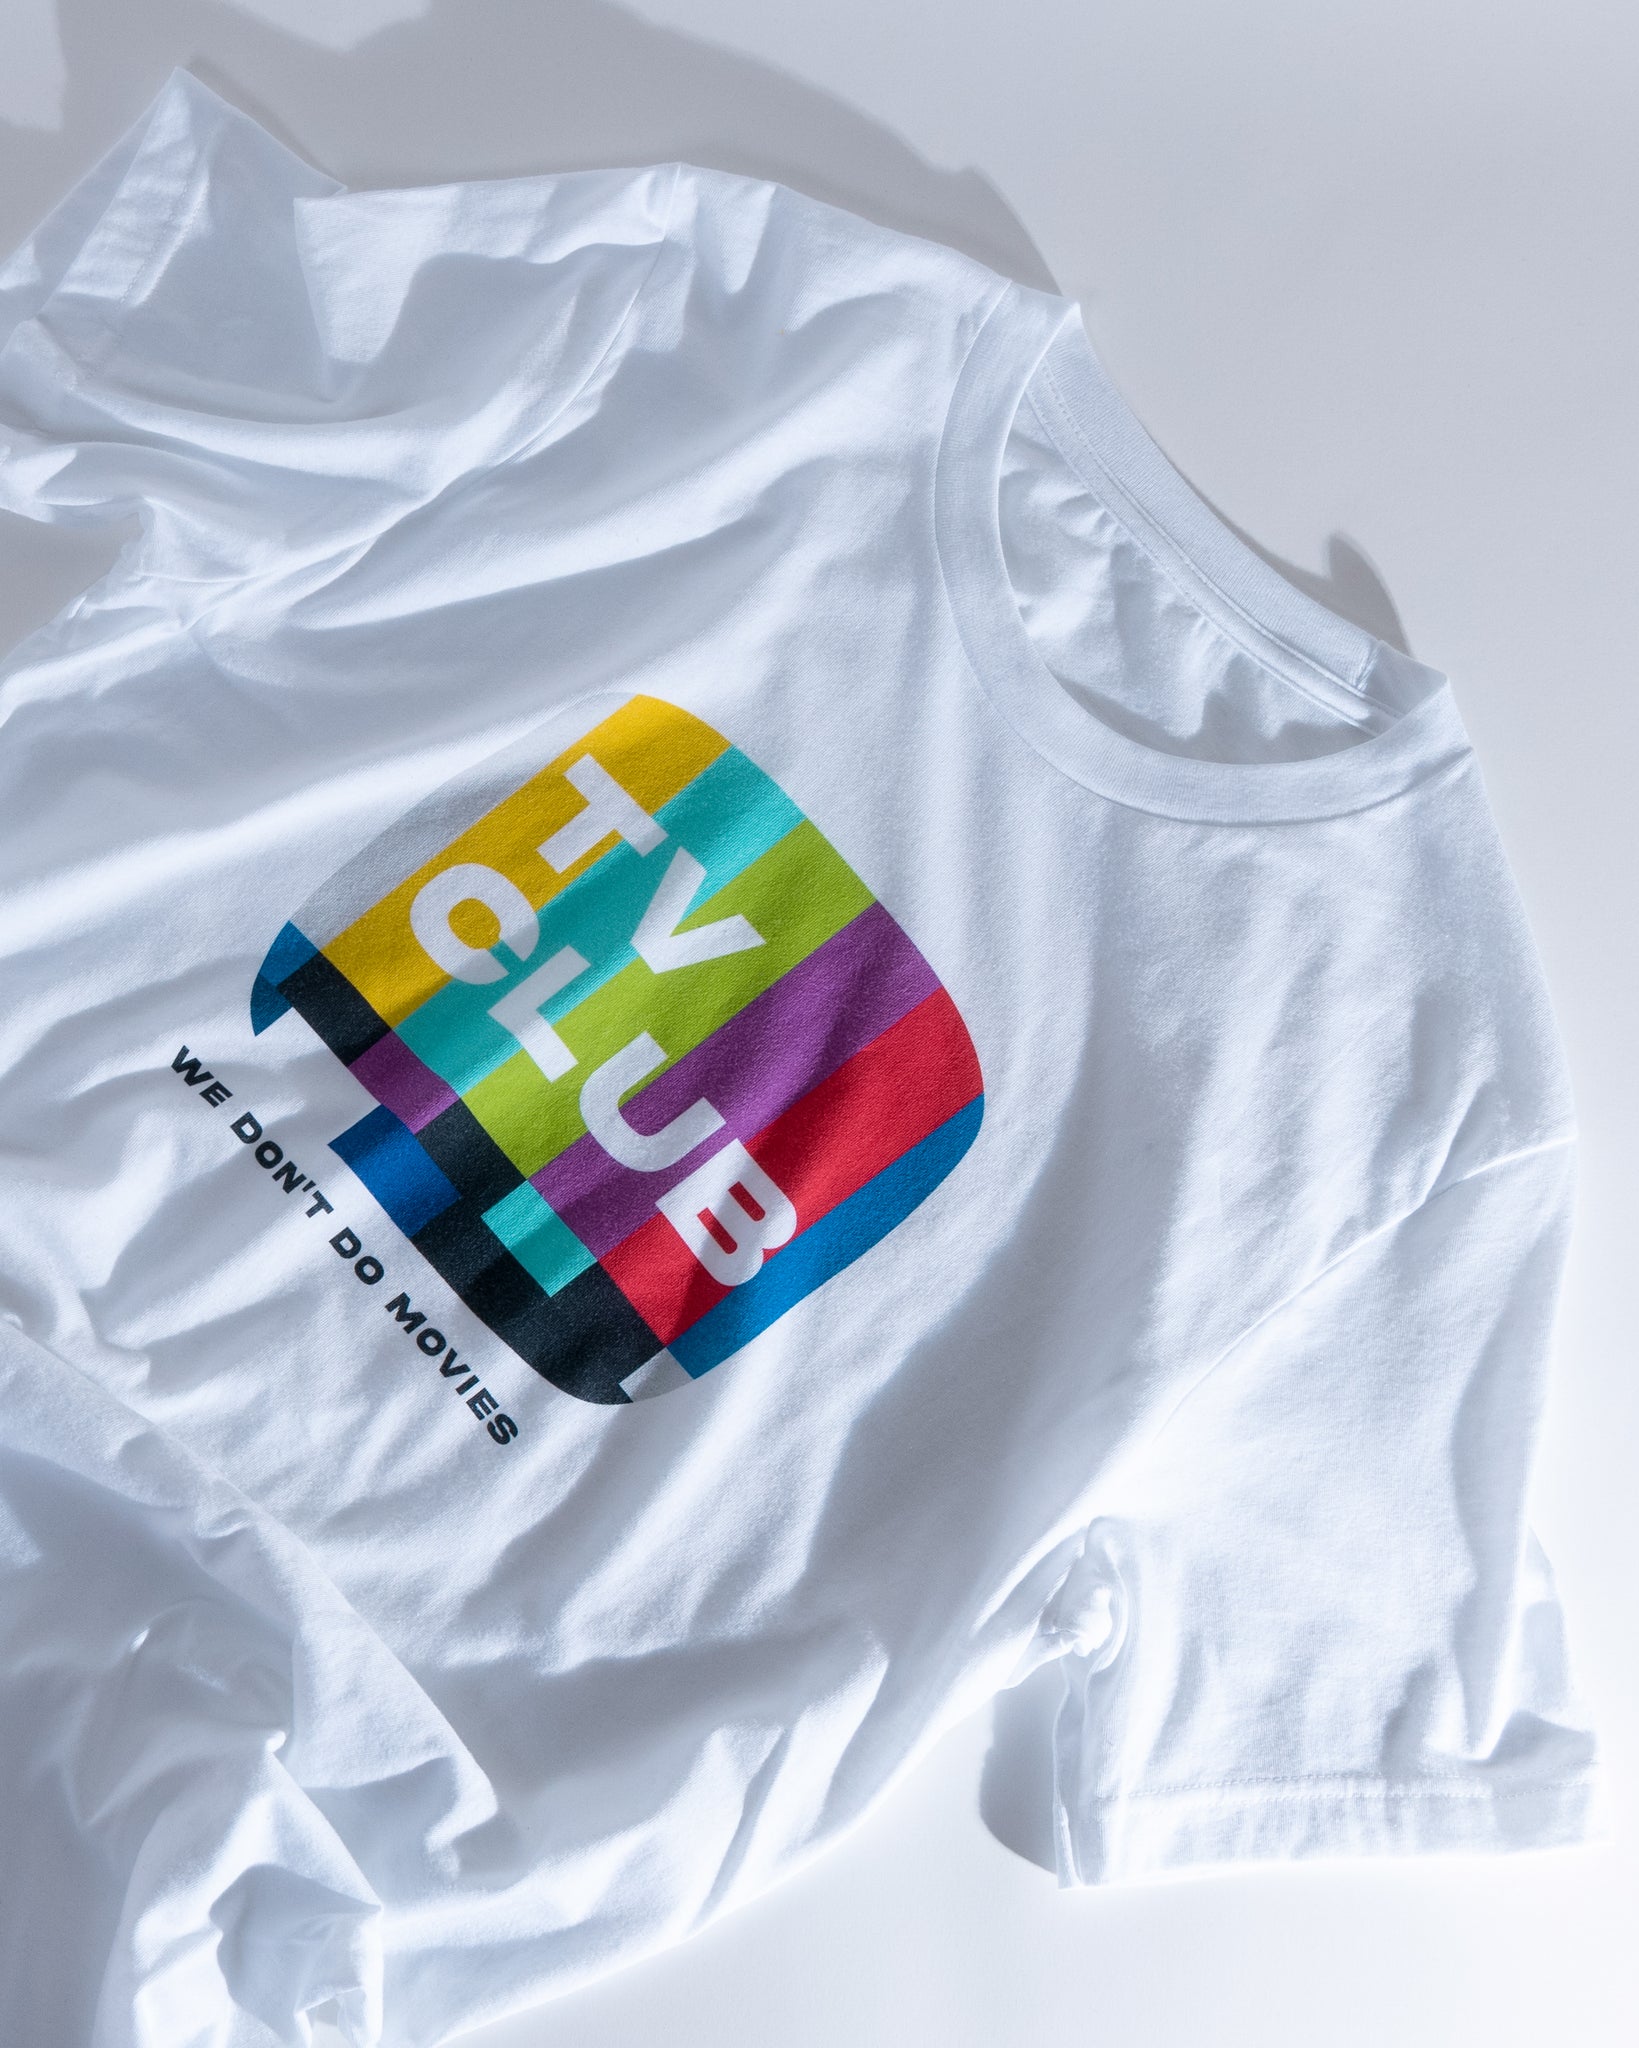 TV, I Say: TV Club T-shirt